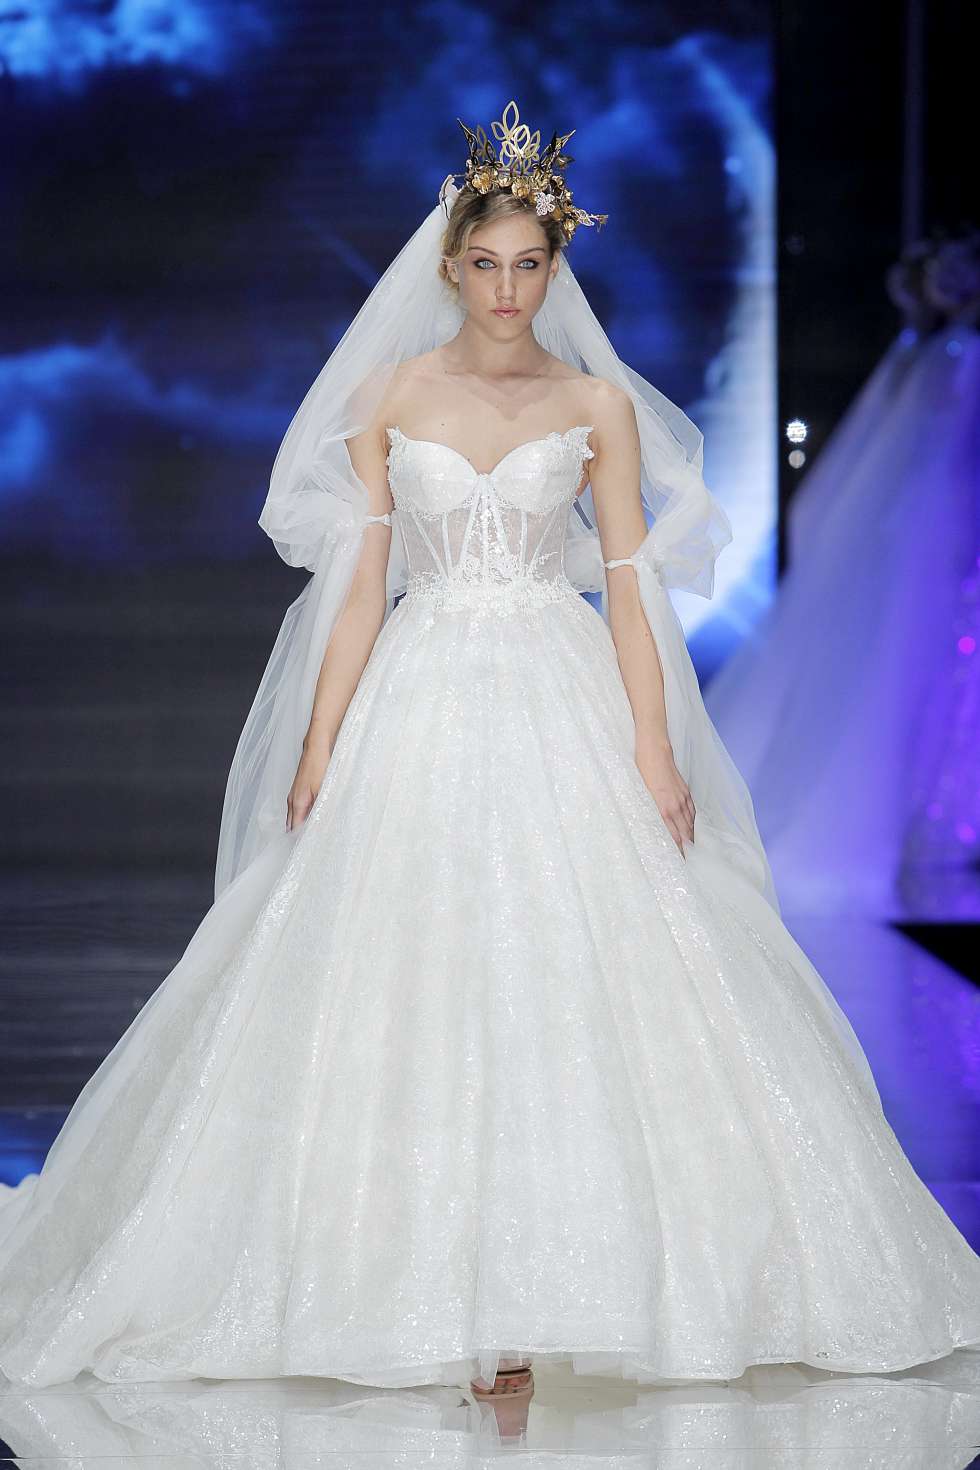 Emiliano Bengasi 2020 Wedding Dresses